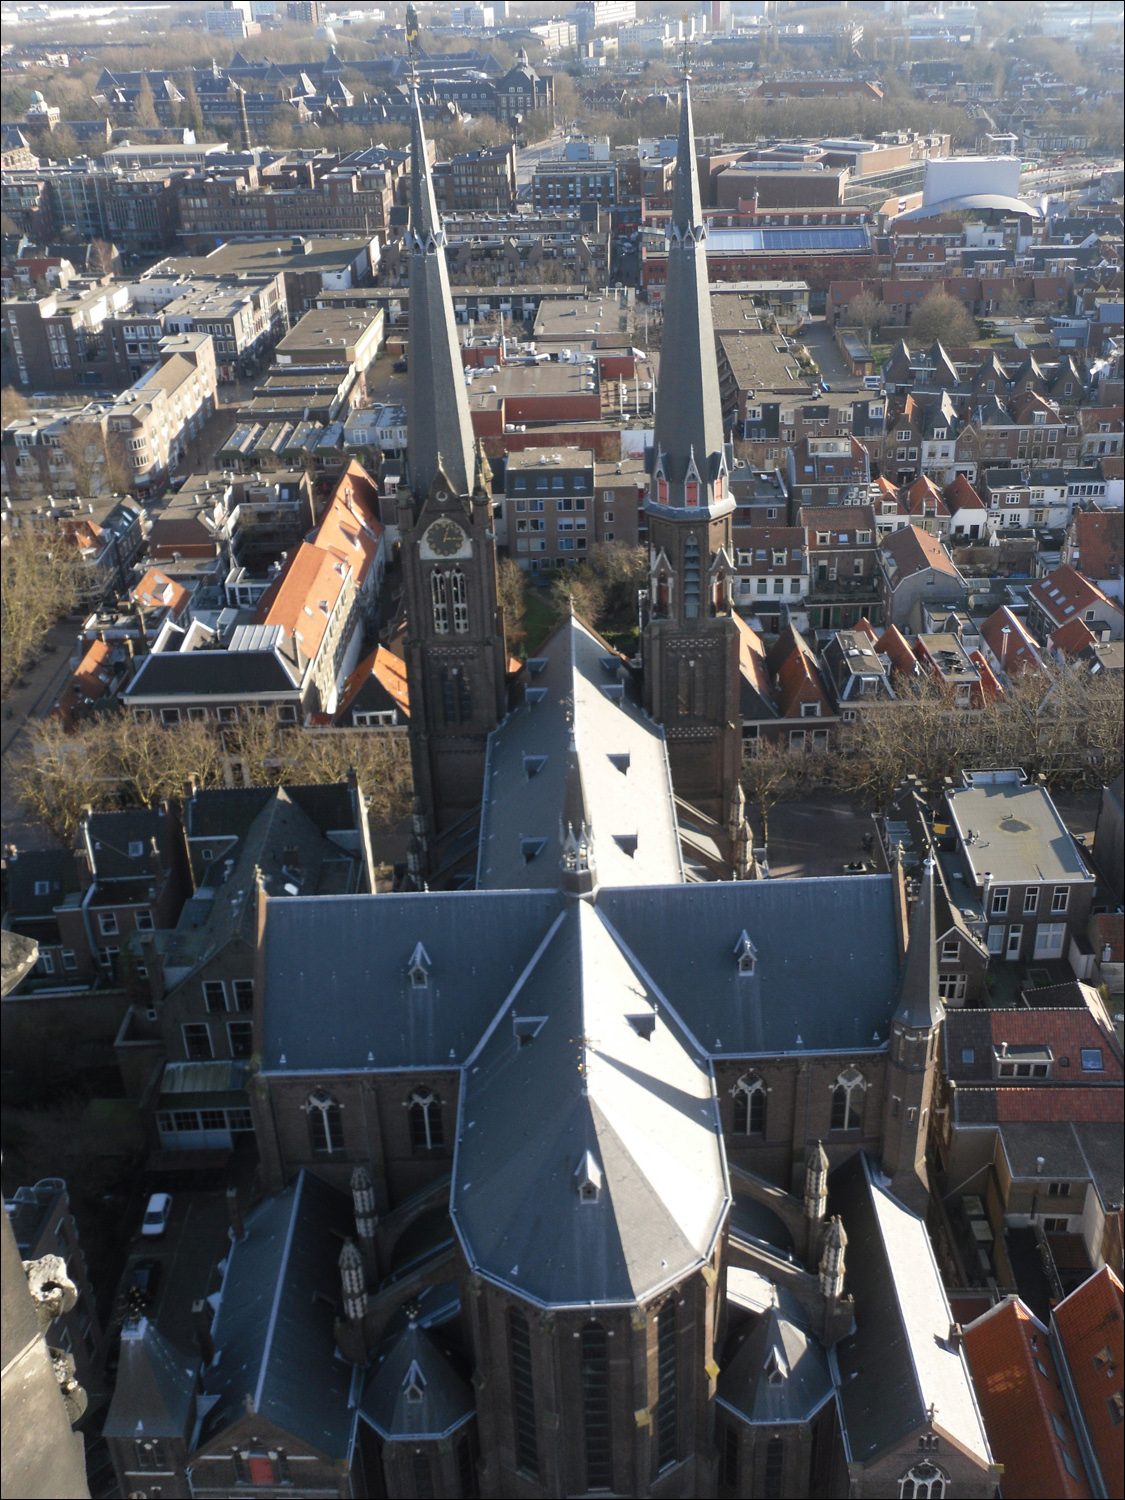 Views from the top of the clock tower on Nieuwe Kerk